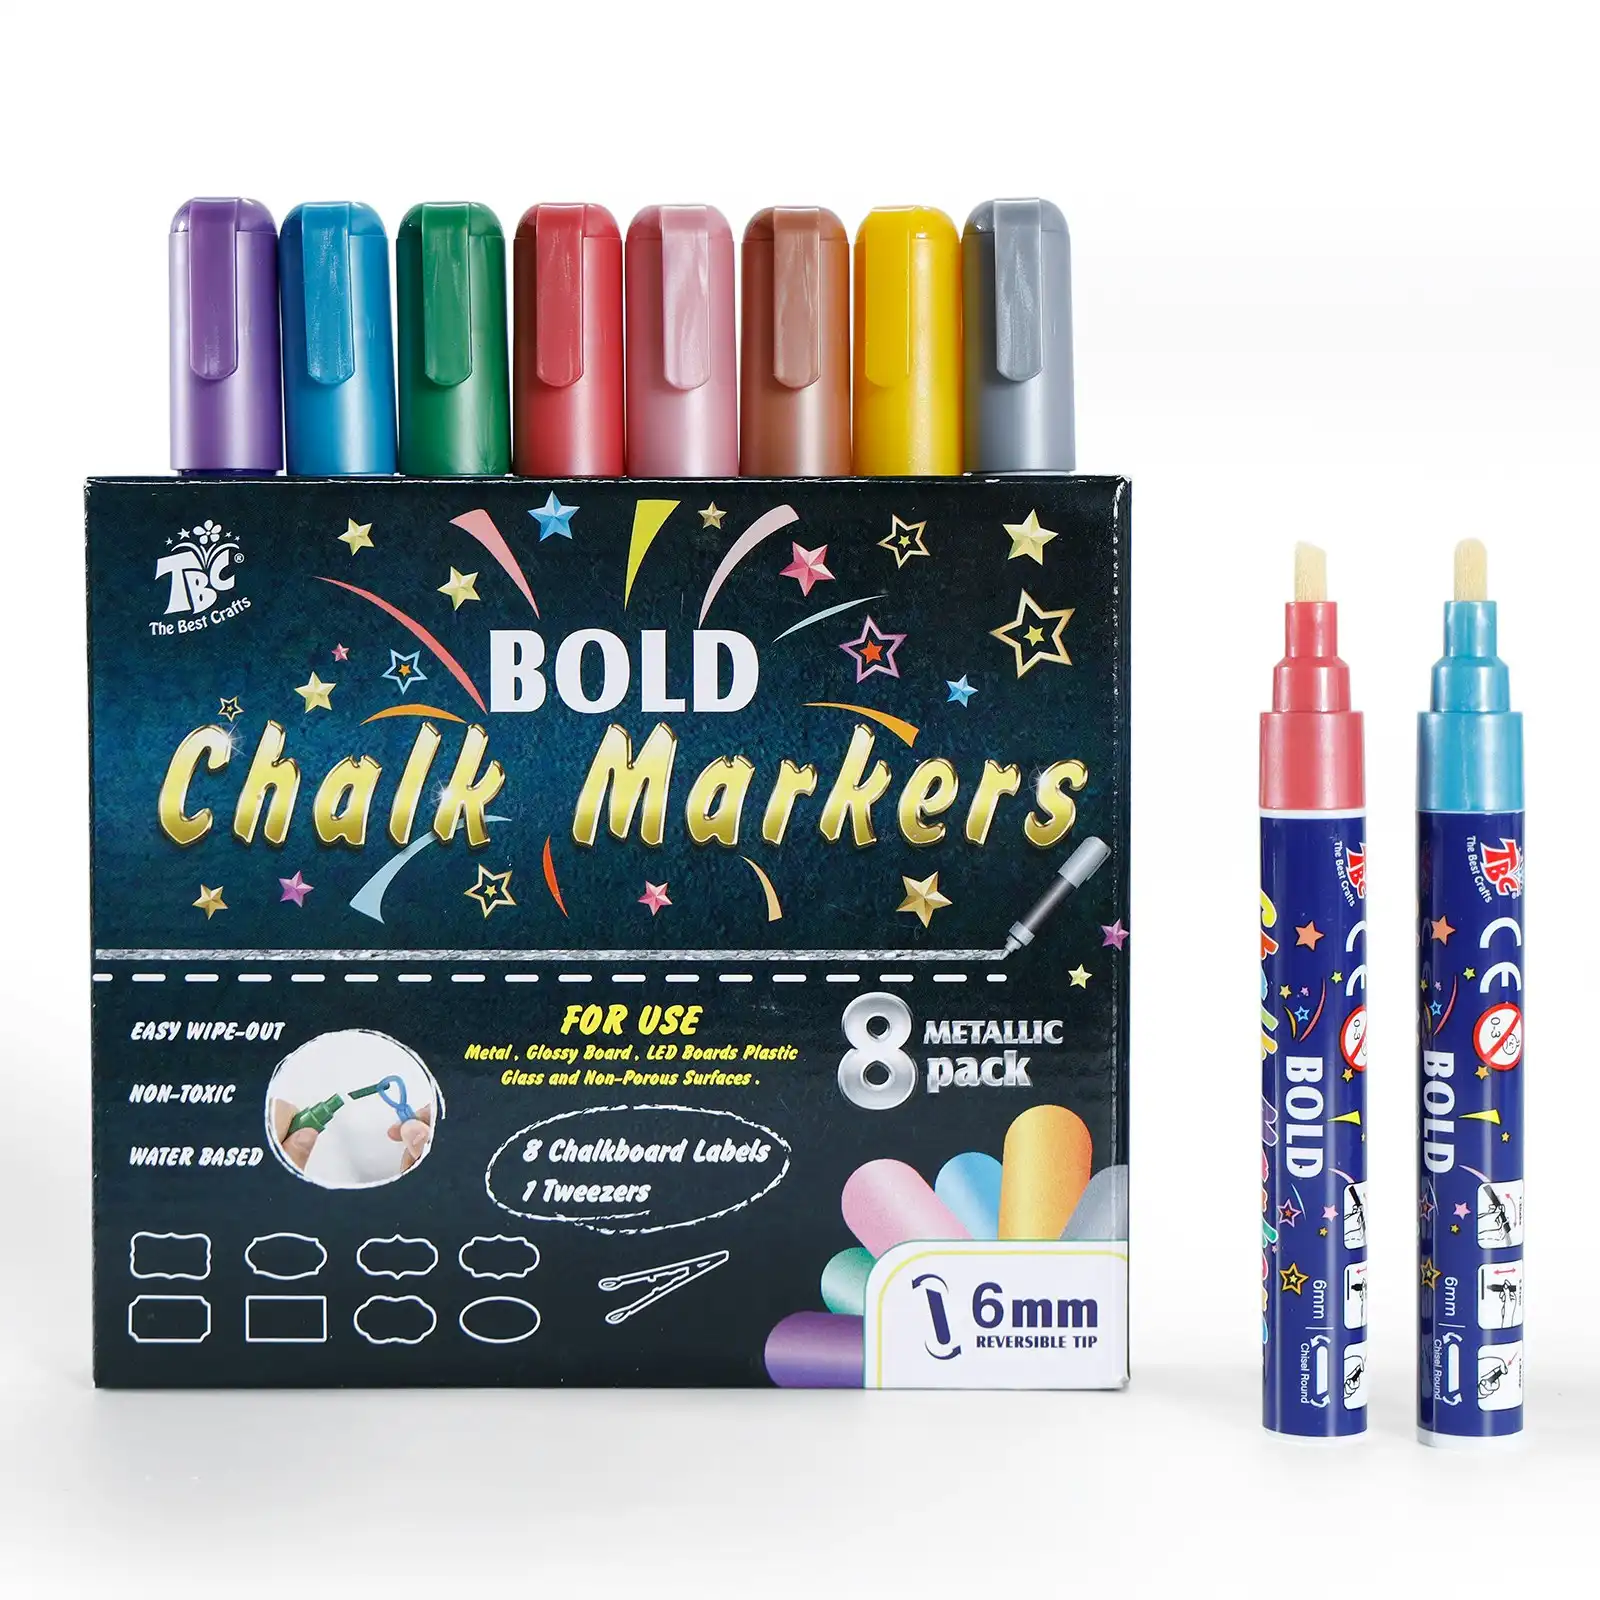 The Best Craft - Metallic Bold Chalk Markers